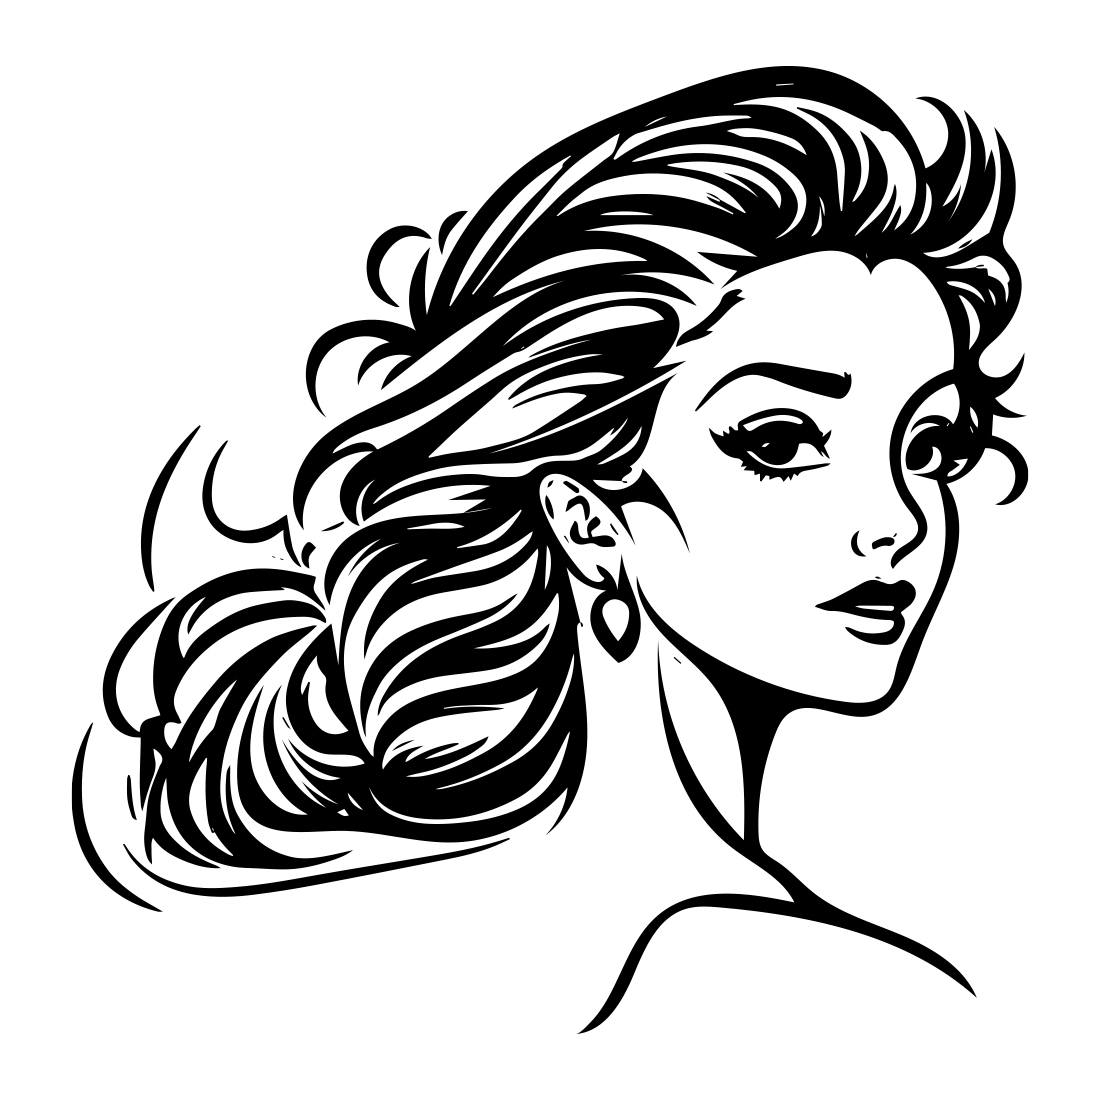 Beauty Parlor, Skincare, Spa, Salon, Logo Design Illustration cover image.